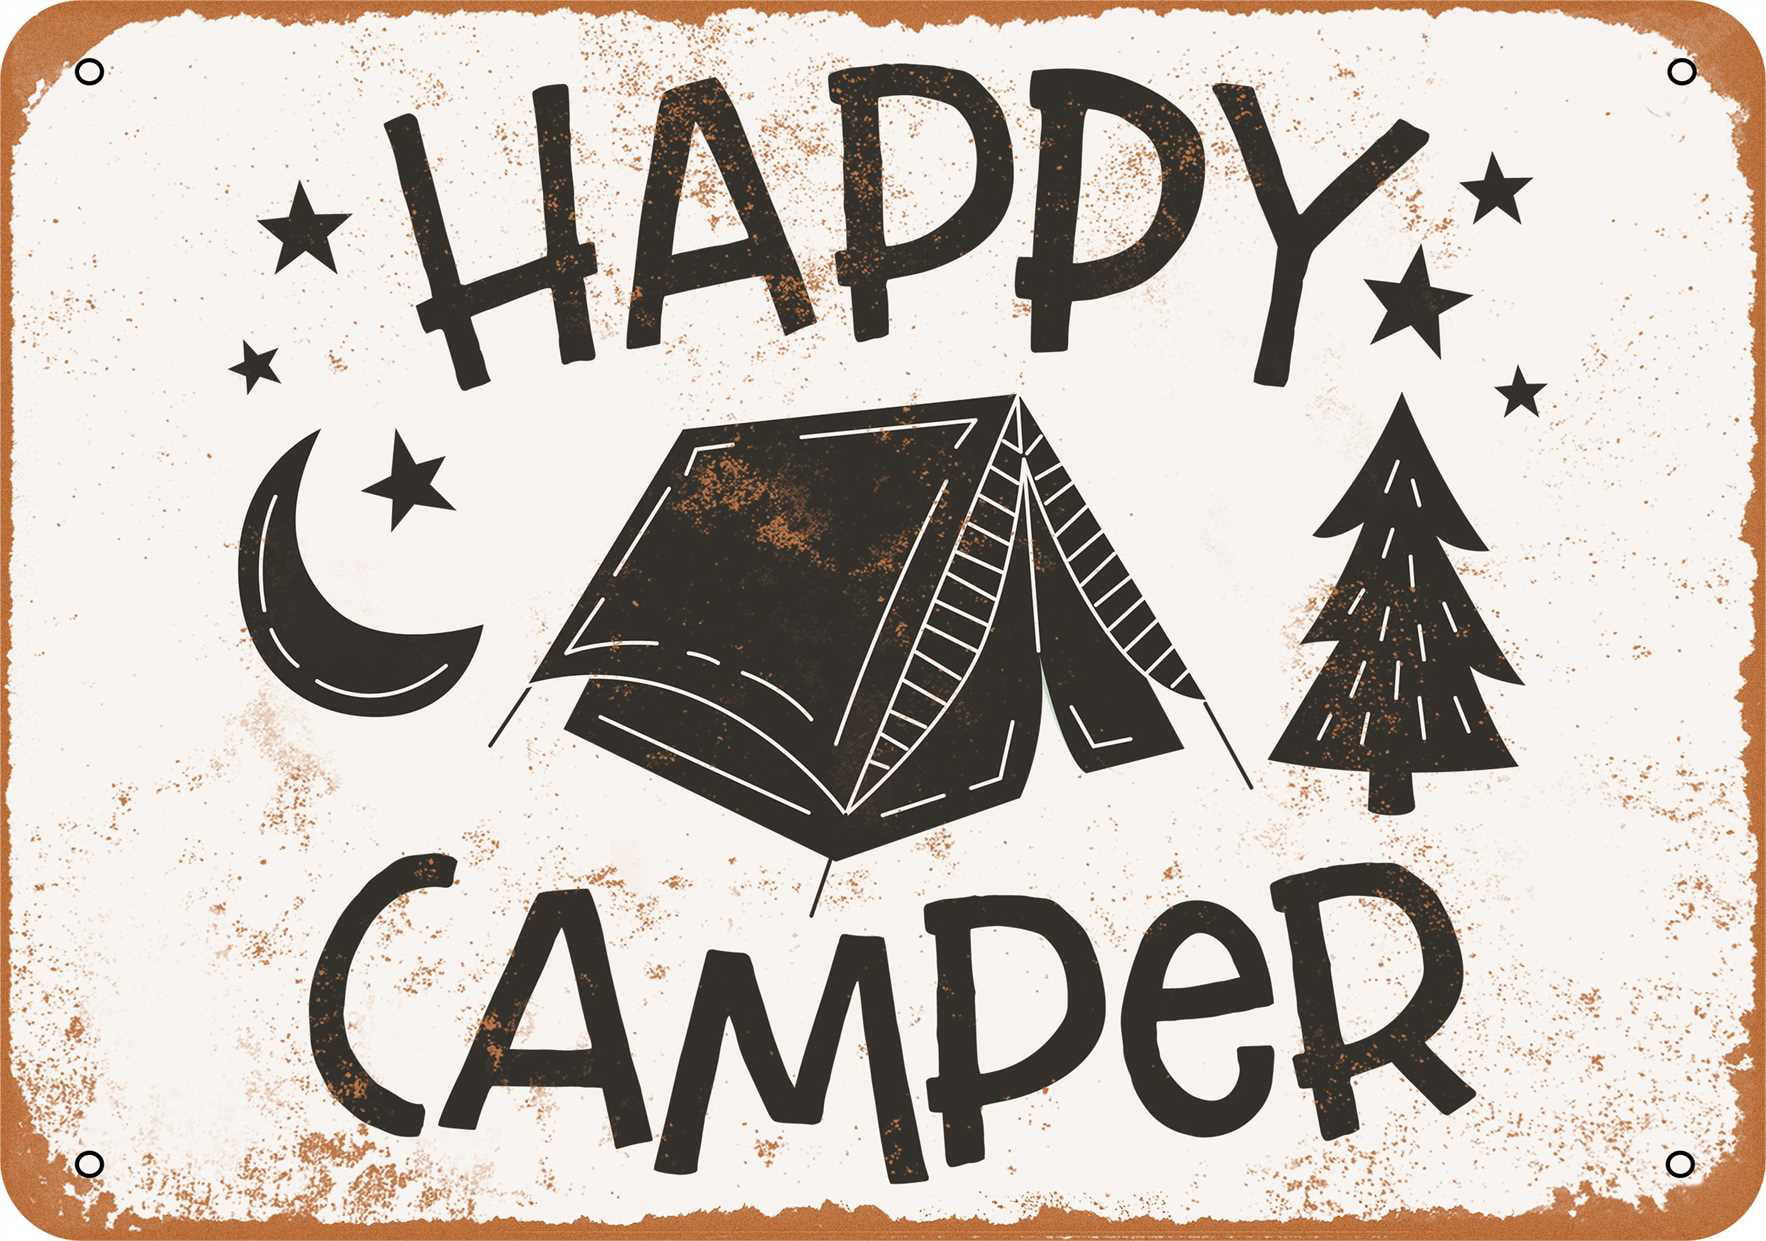 Happy Camper Tent Metal Sign - 9x12 inch - Vintage Look - Walmart.com